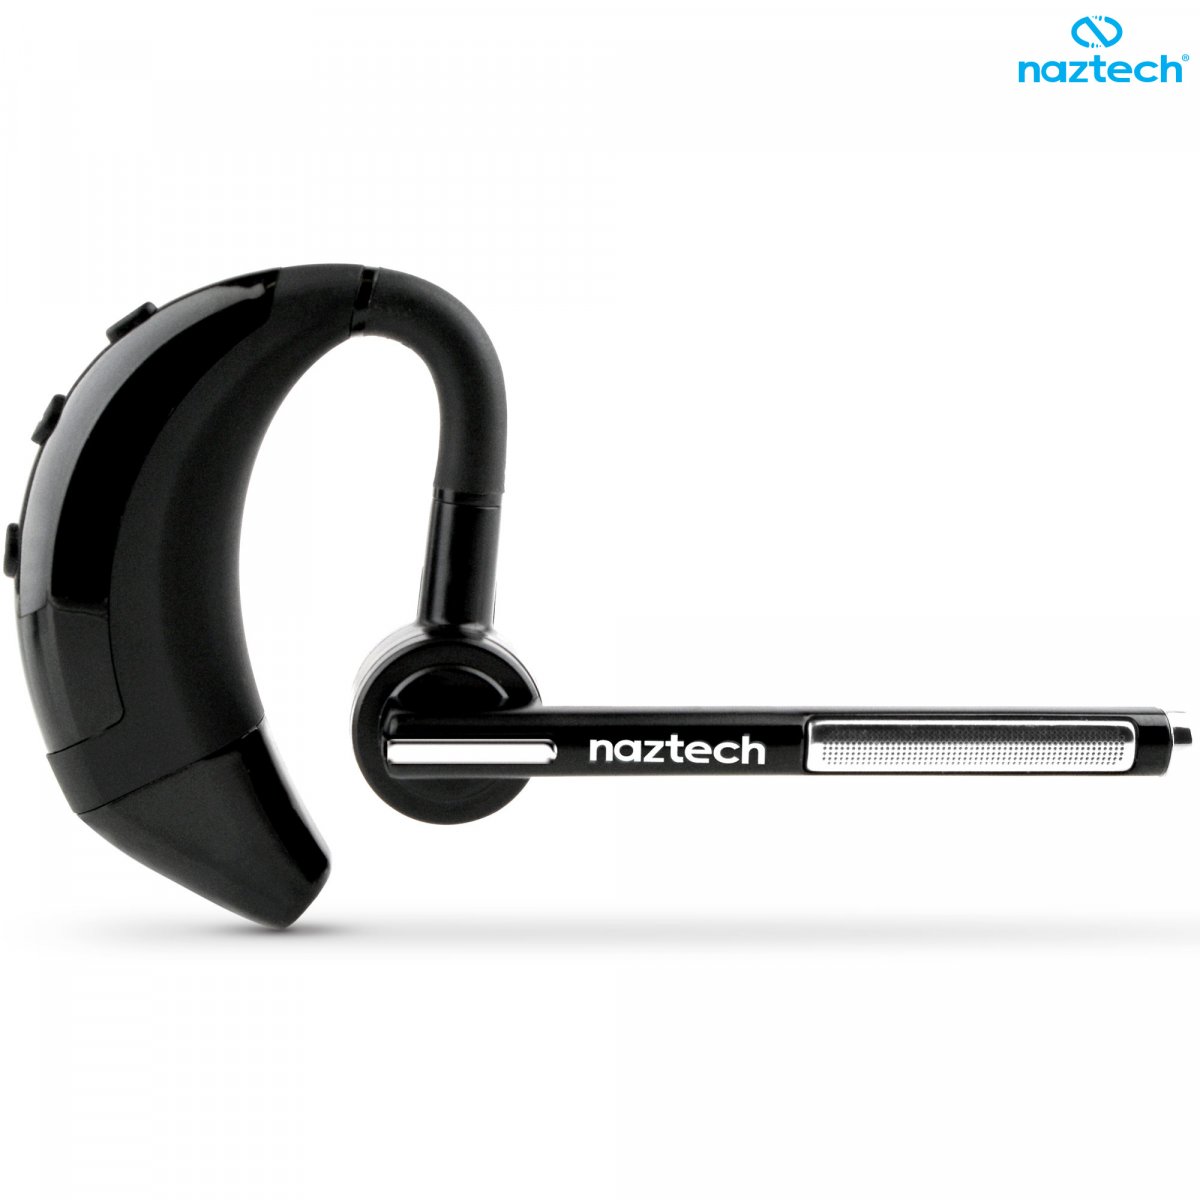 Bluetooth headset fra Naztech: & komfortabelt - au2TEK.dk